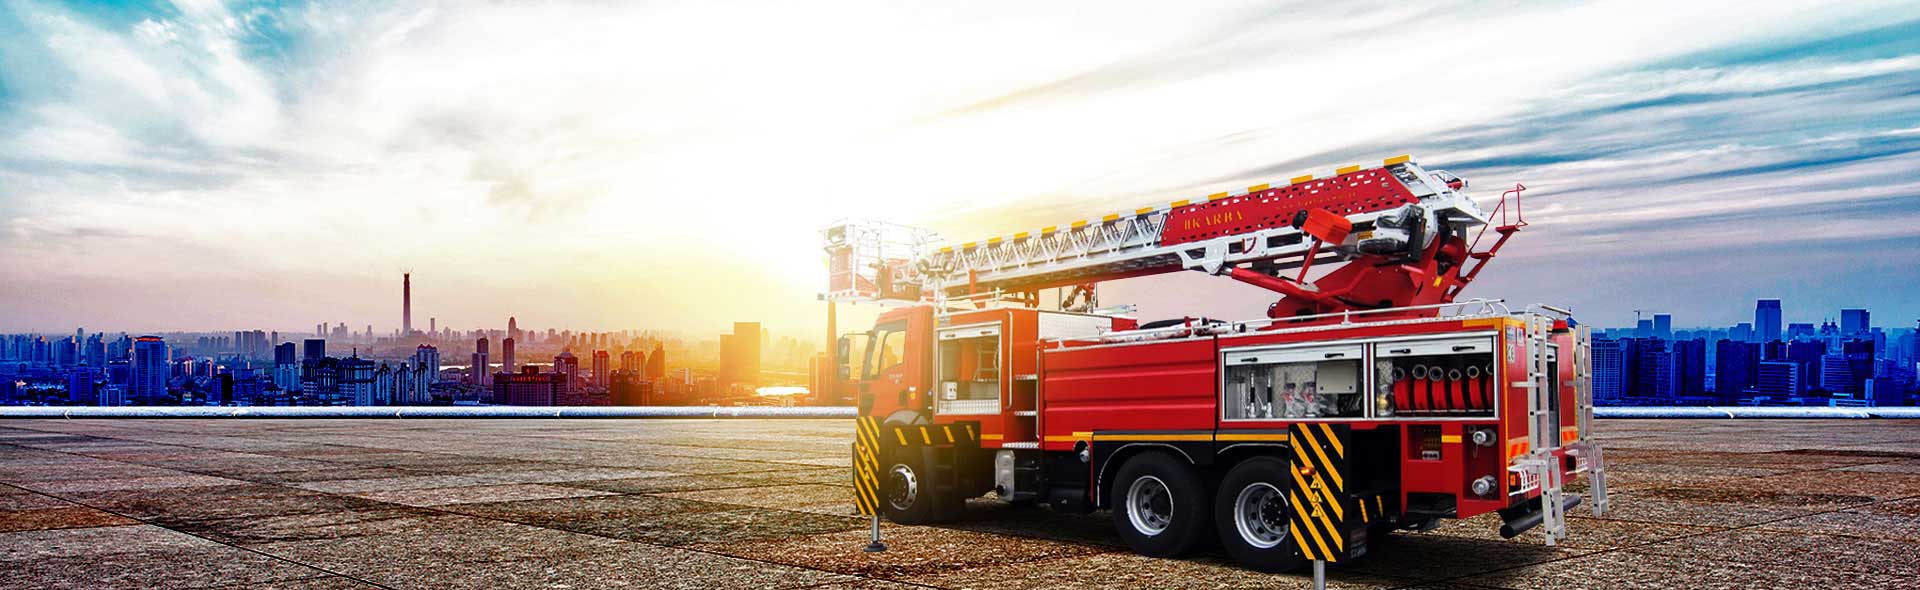 Hydraulic Ladder Firefighting Vehicles